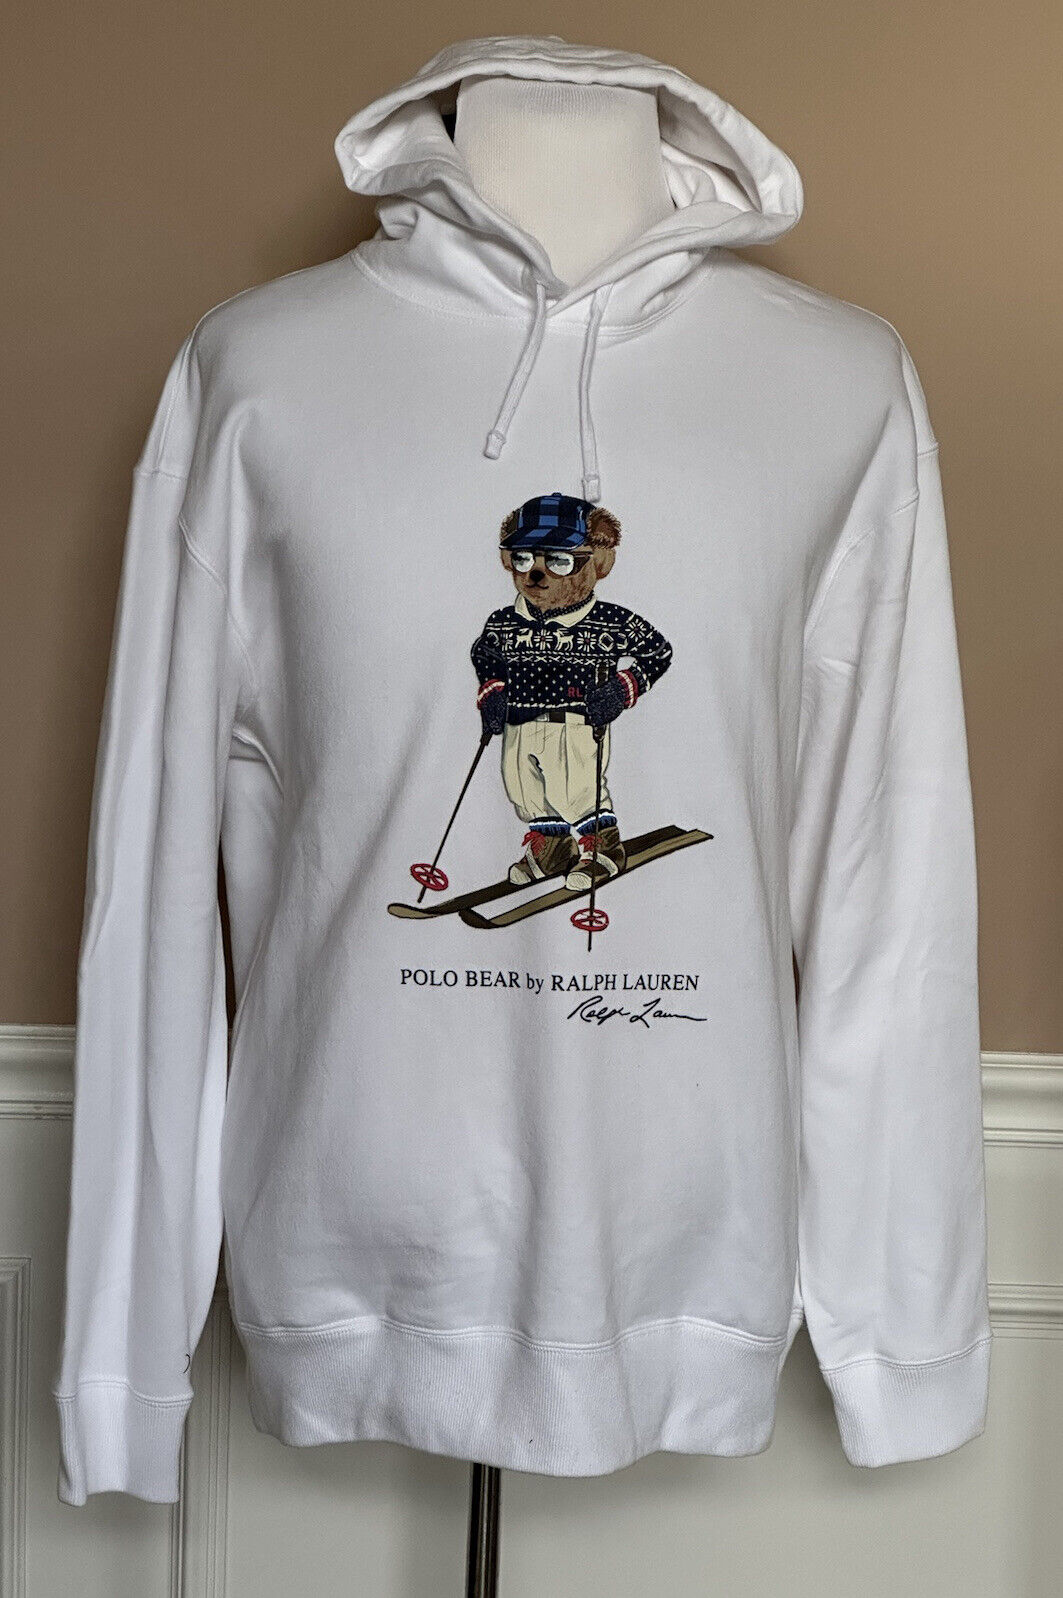 NWT $188 Polo Ralph Lauren Long Sleeve Bear Sweatshirt with Hoodie White 1XB/1TG